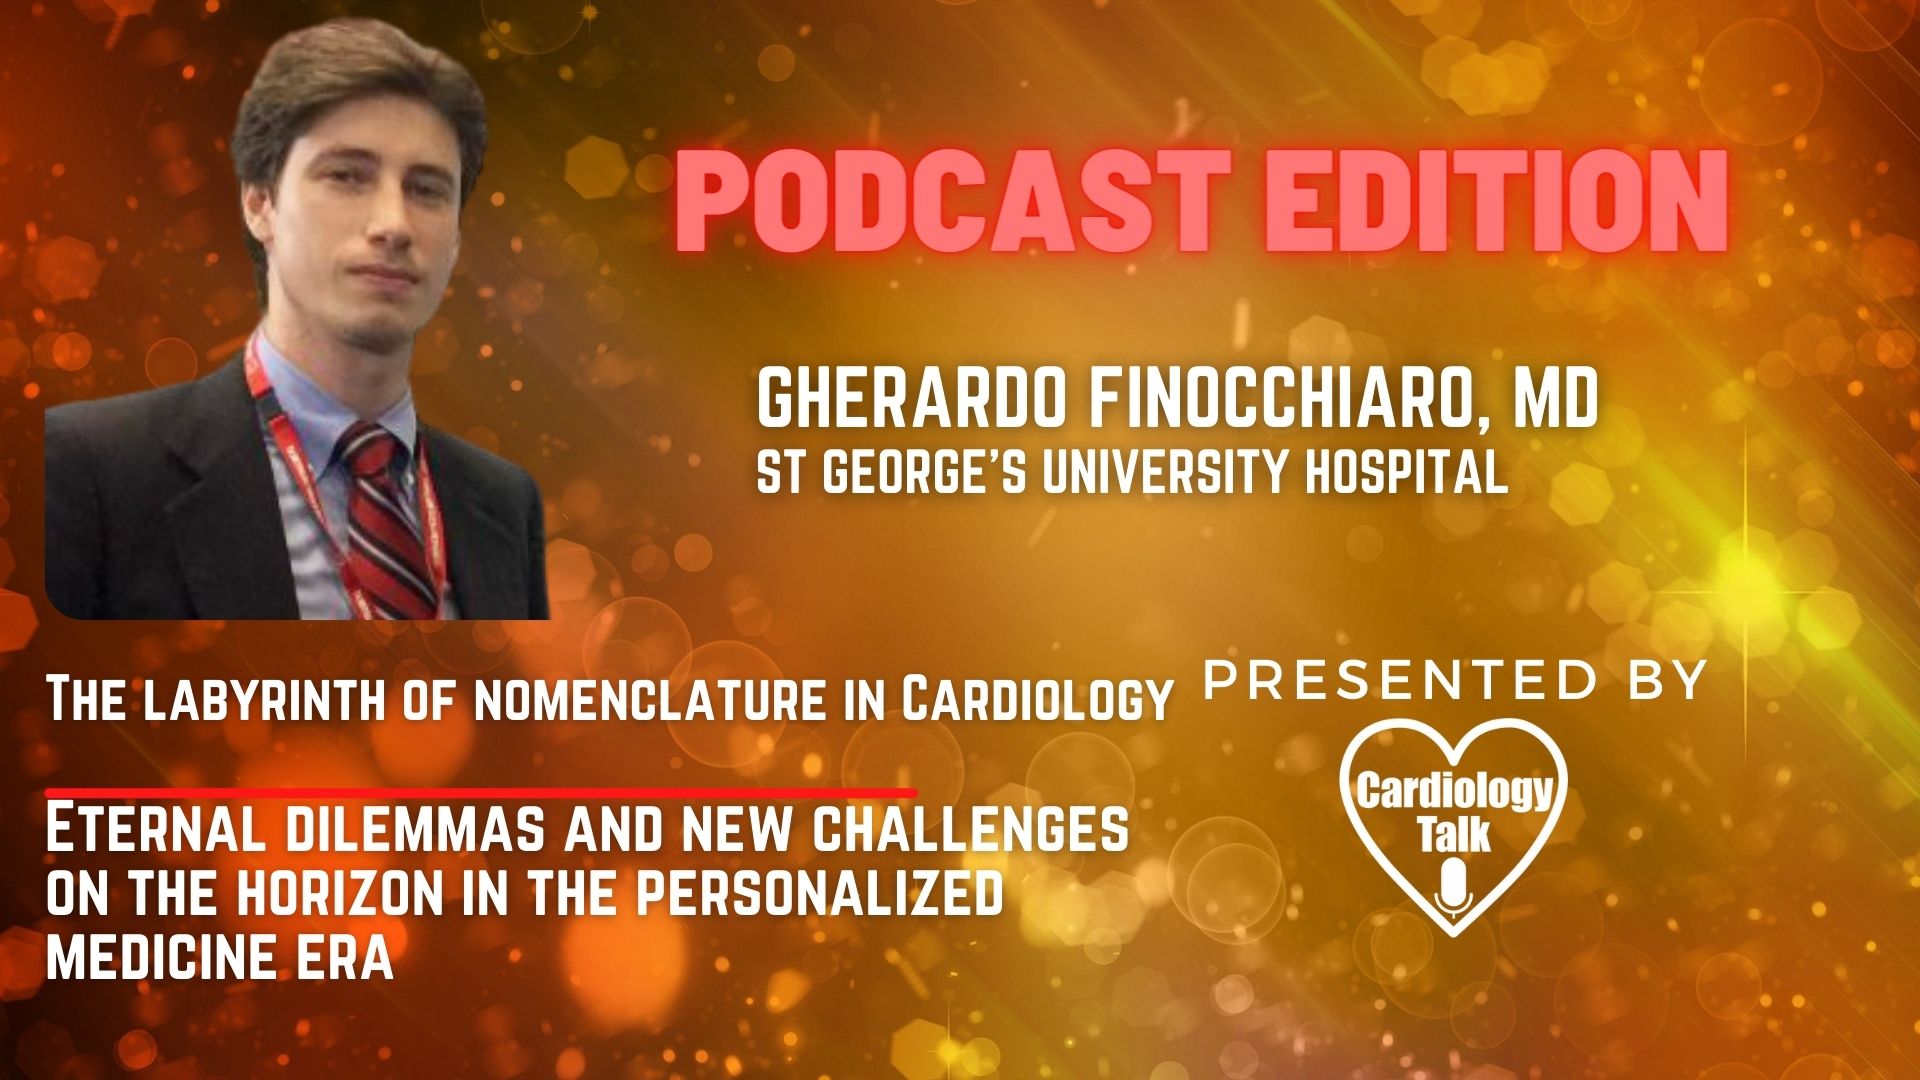 Podcast - Gherardo Finocchiaro, MD @gherardobis @RBandH @StGeorgesTrust @LondonU #PersonalizedMedicine #Cardiology #Research The Labyrinth Of Nomenclature In Cardiology